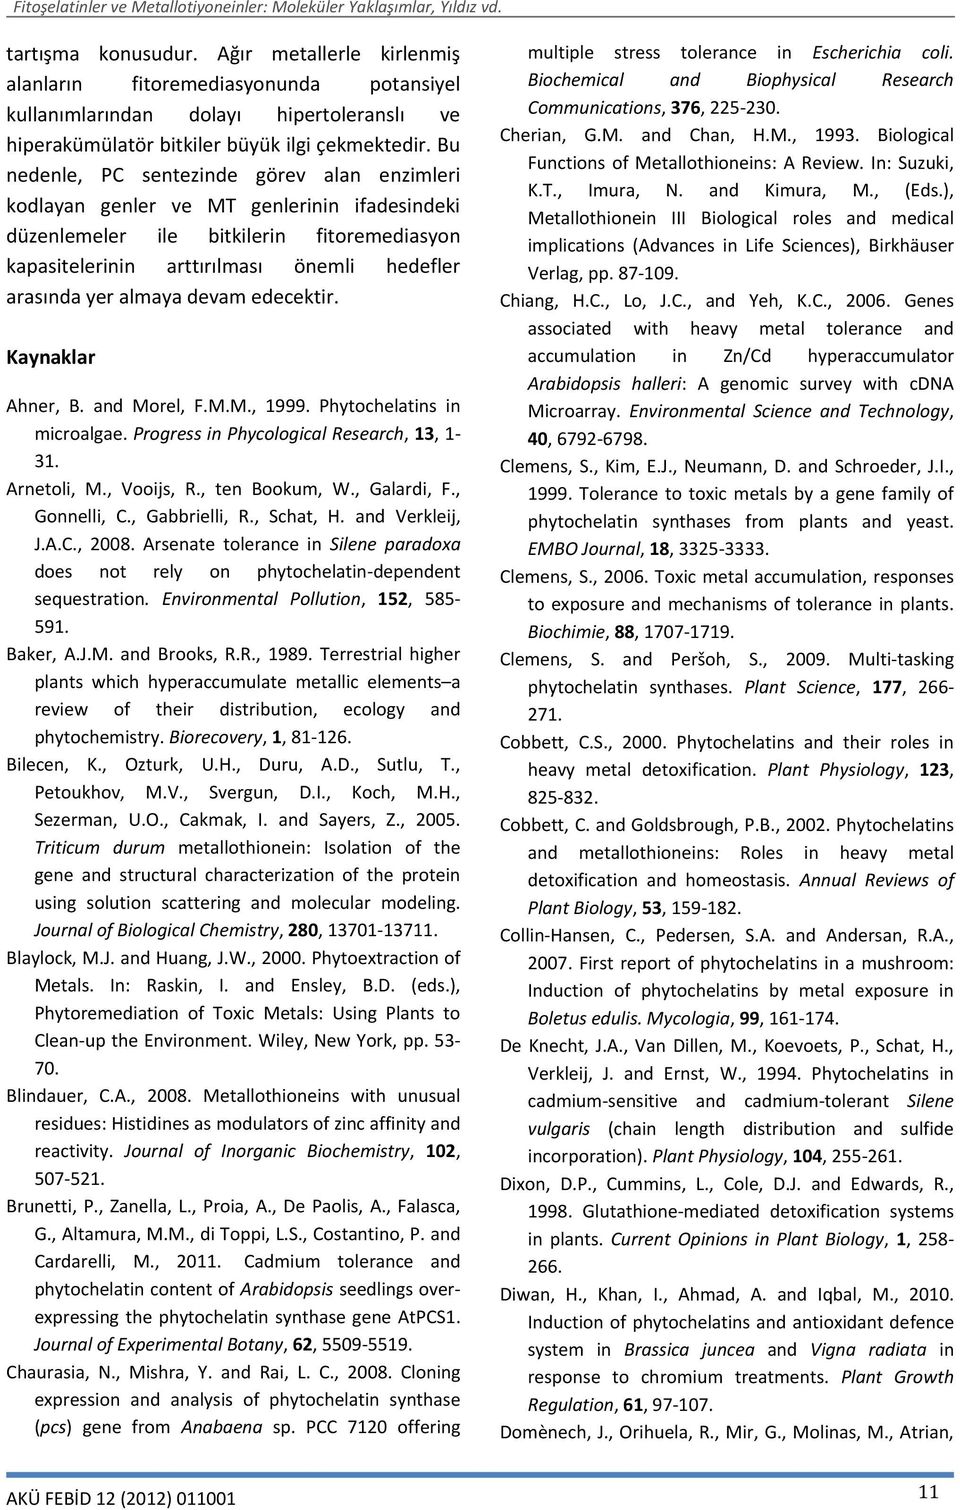 almaya devam edecektir. Kaynaklar Ahner, B. and Morel, F.M.M., 1999. Phytochelatins in microalgae. Progress in Phycological Research, 13, 1-31. Arnetoli, M., Vooijs, R., ten Bookum, W., Galardi, F.